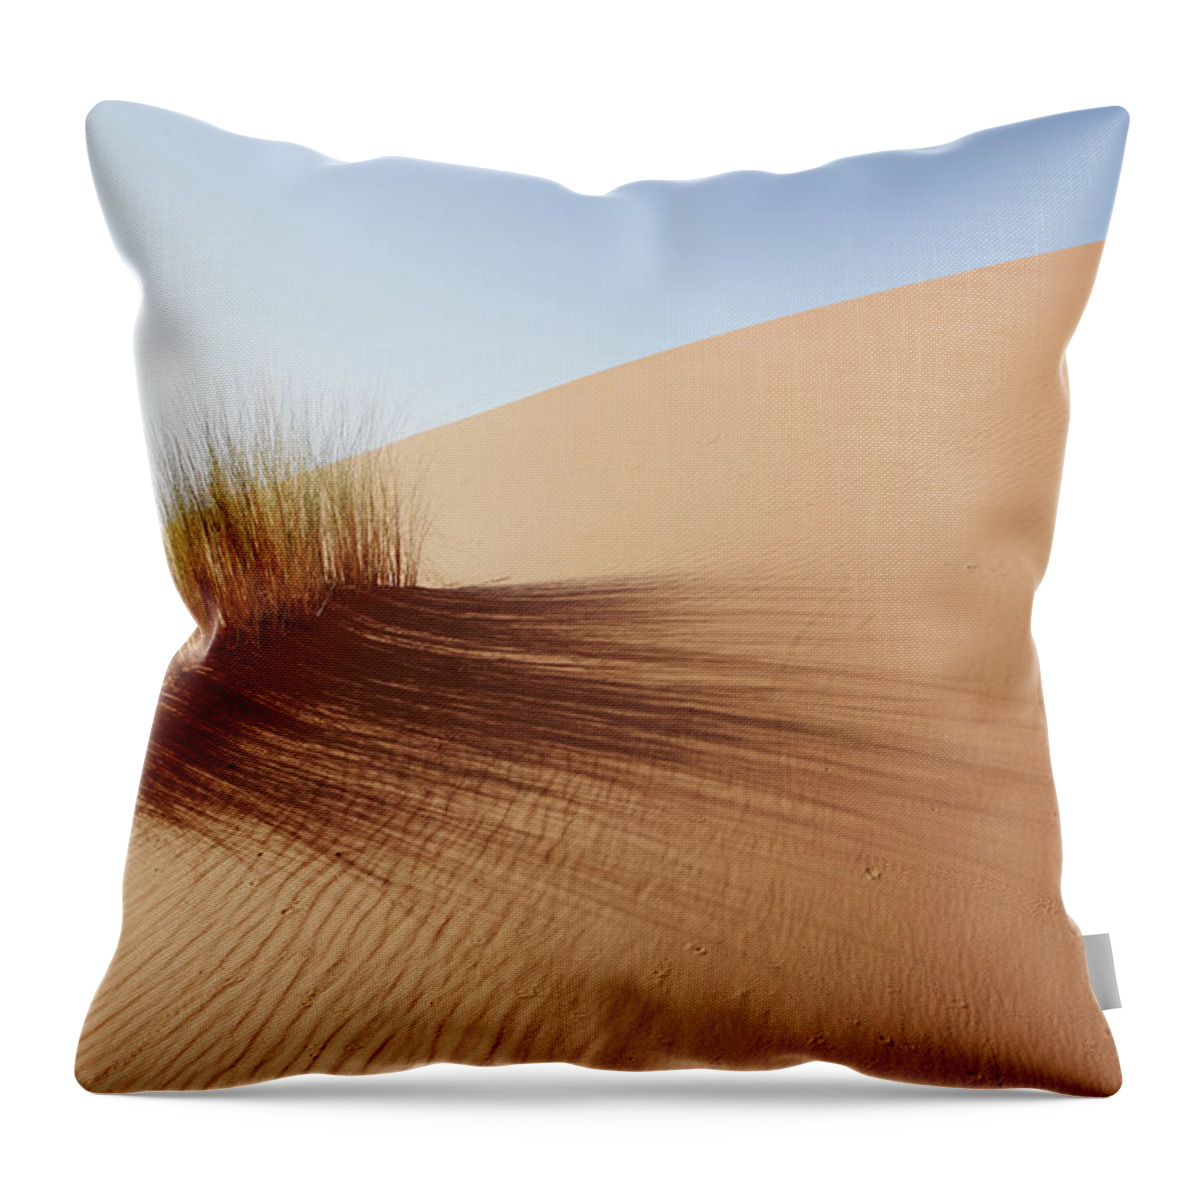 Grass Family Throw Pillow featuring the photograph Grass In Sahara Desert, Merzouga by Tunart